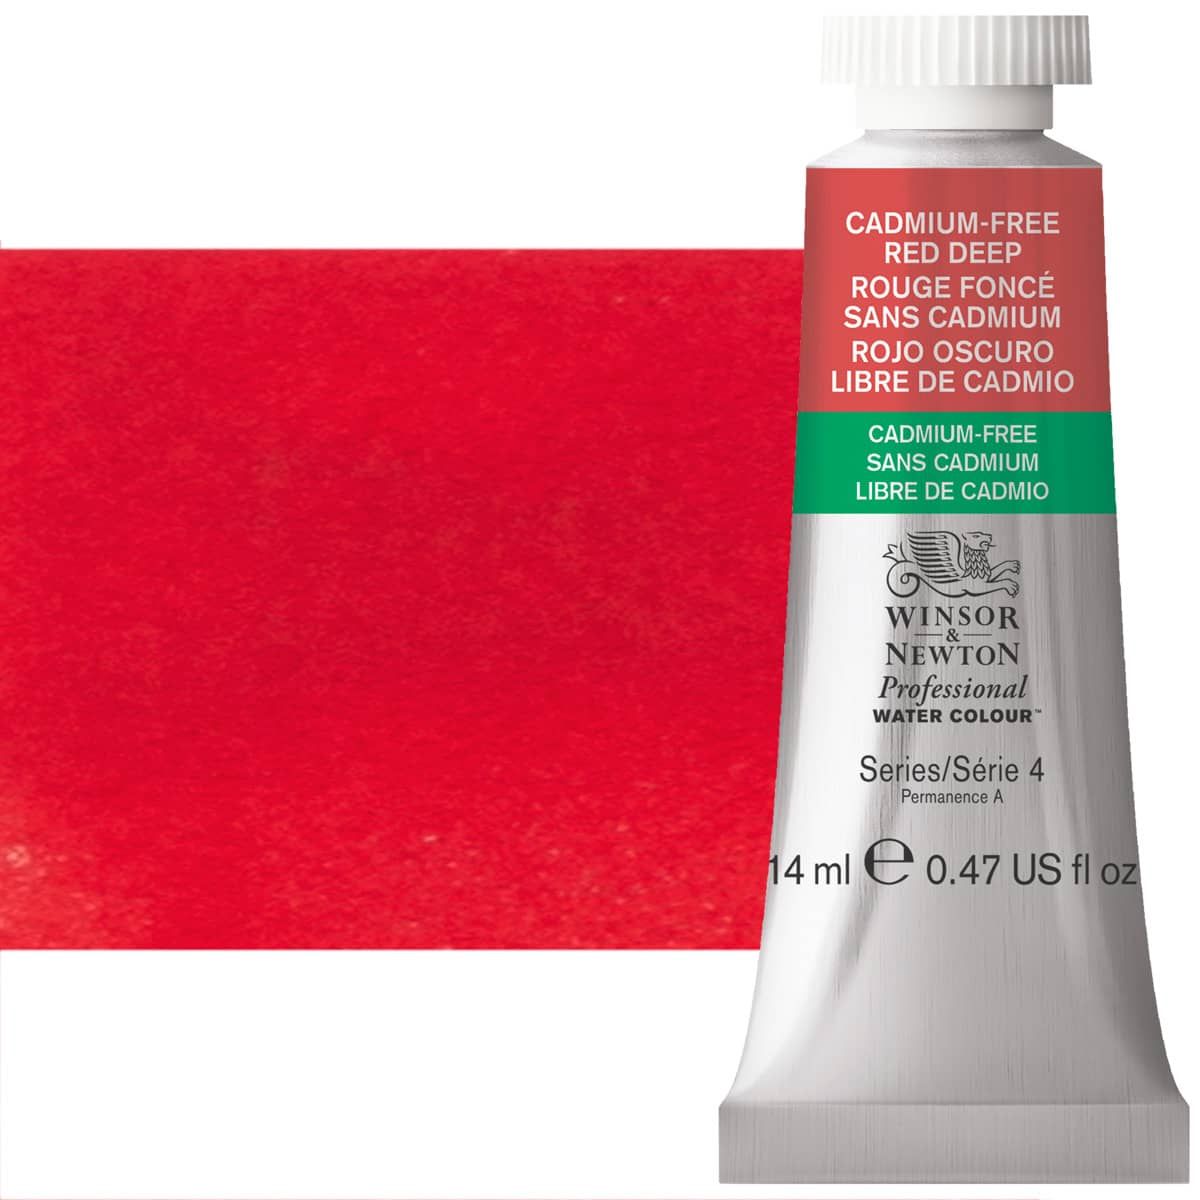 Winsor & Newton Professional Watercolor - Cadmium-Free Red Deep, 14ml Tube